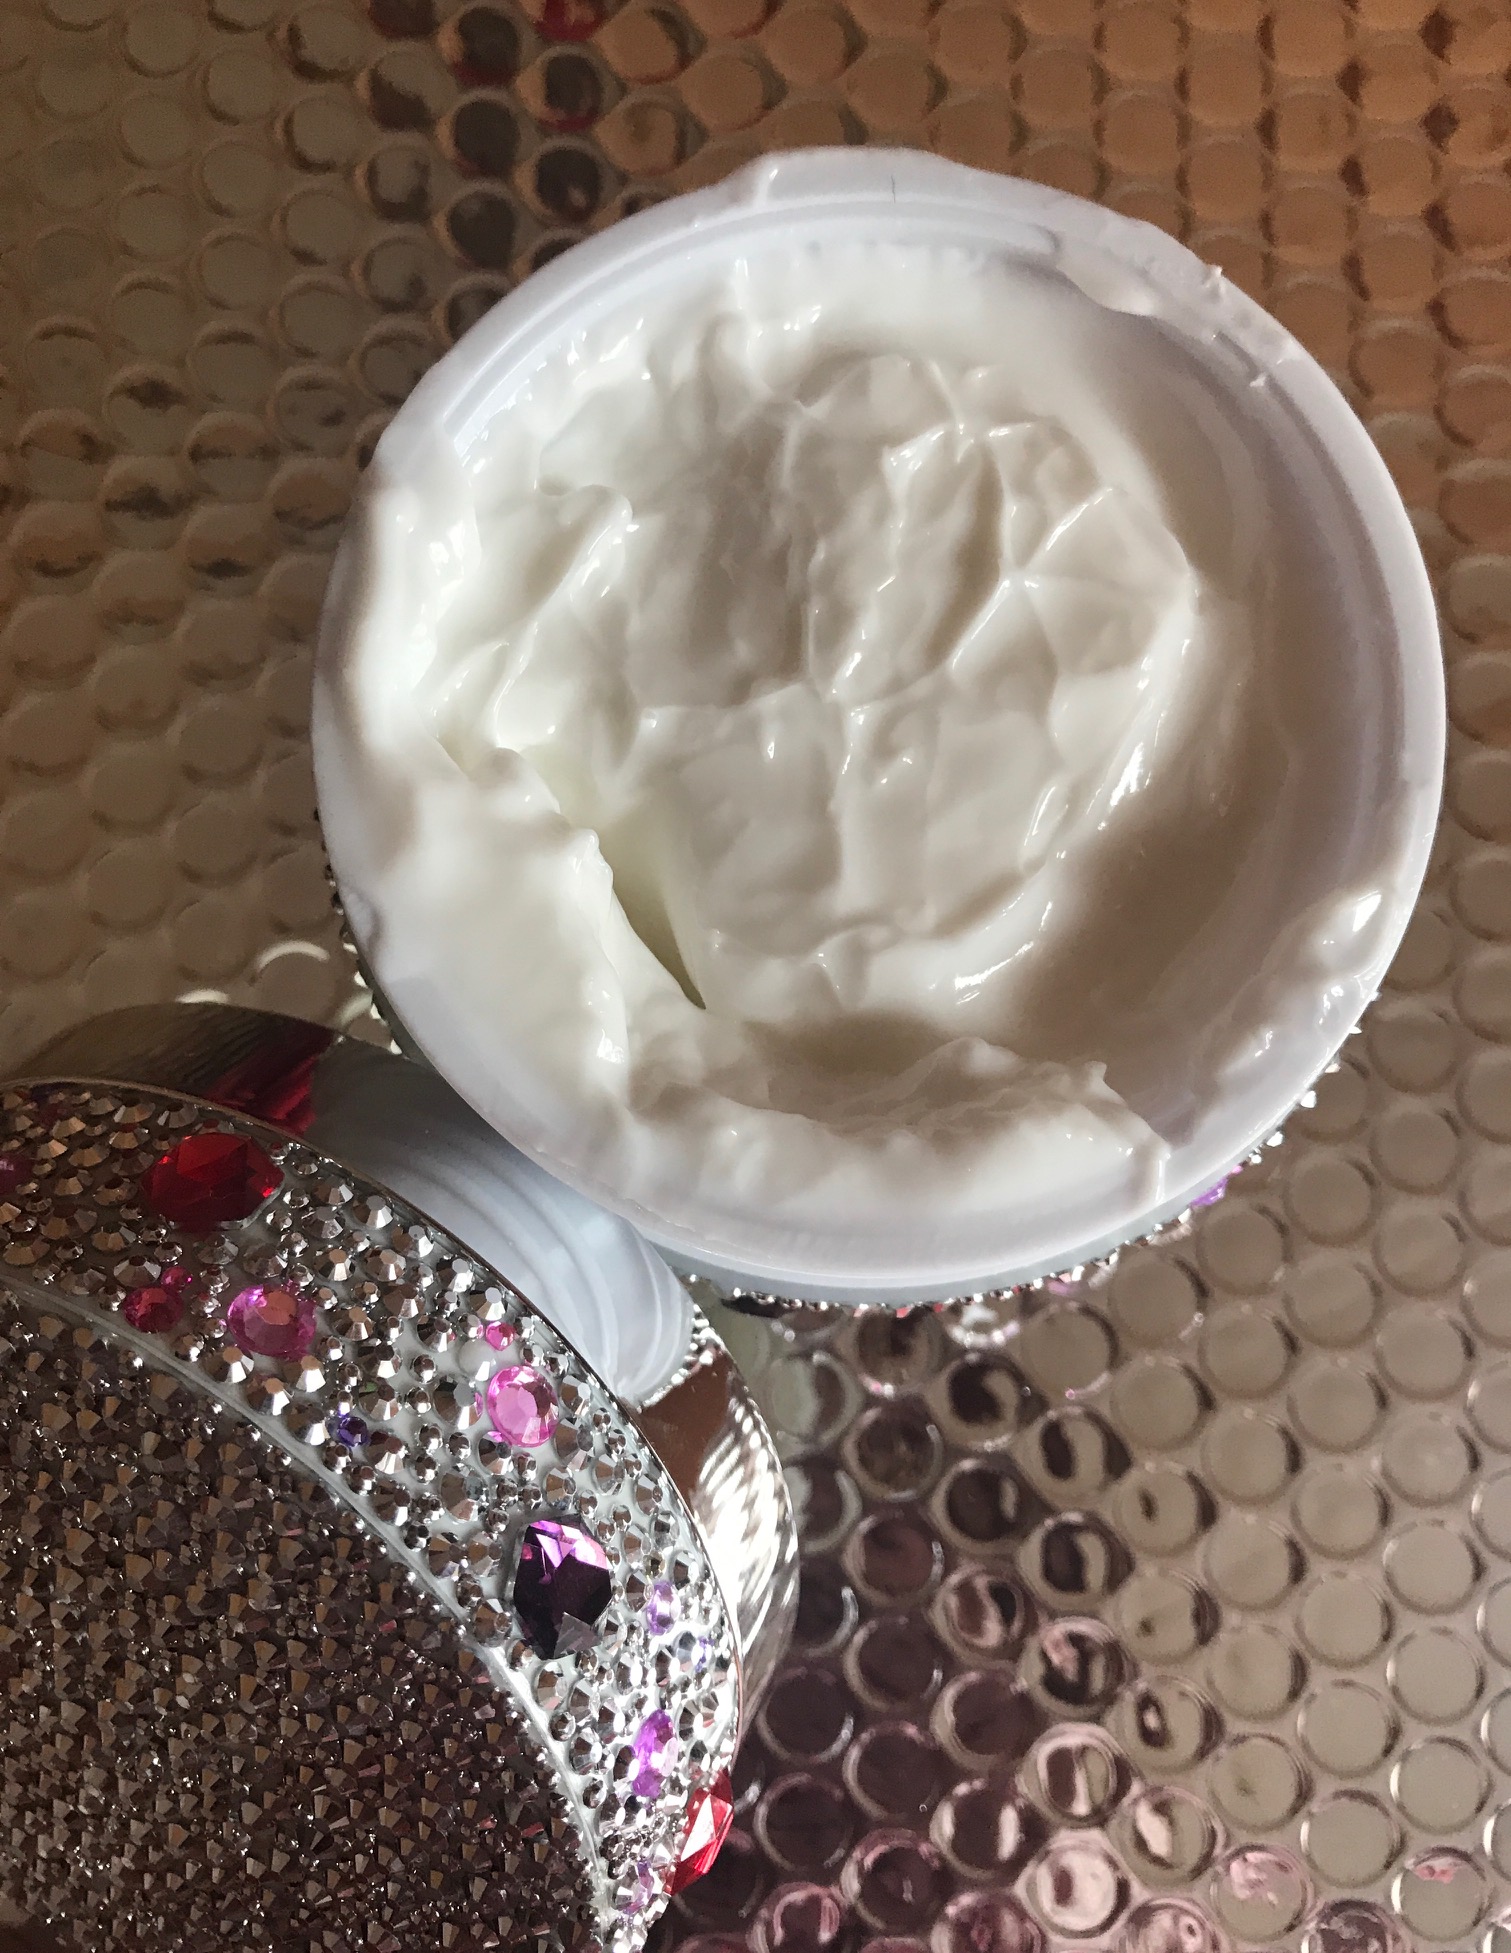 the white cream inside the jar of PRAI Throat & Decolletage Cream, neversaydiebeauty.com